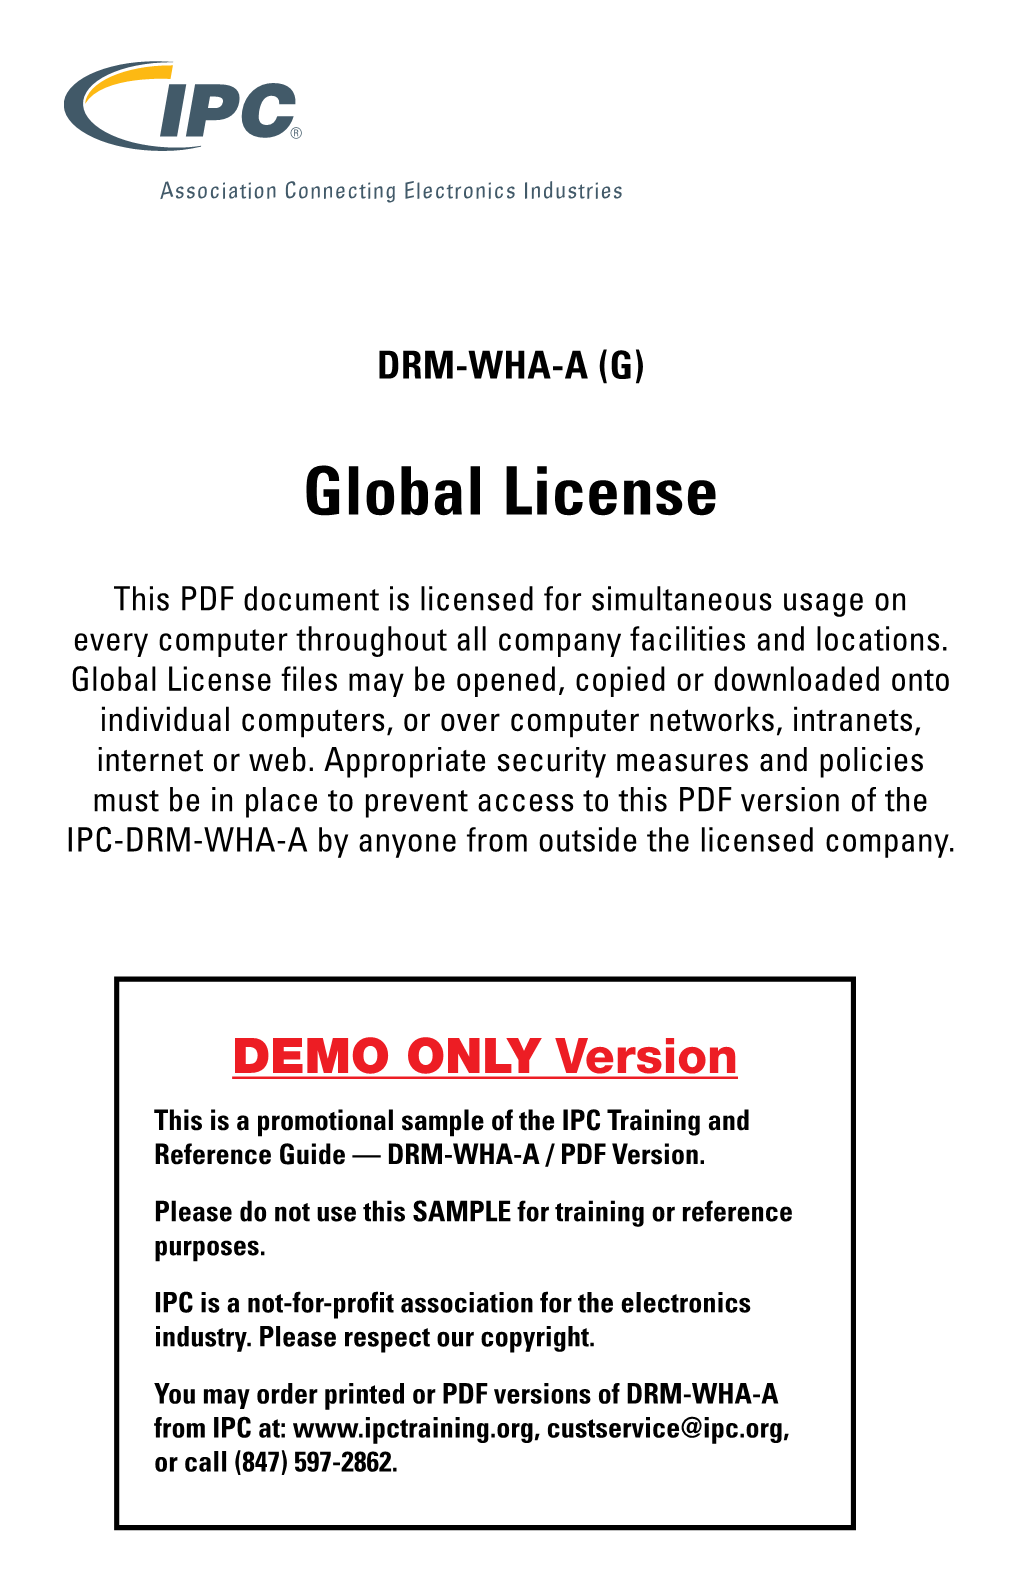 Global License